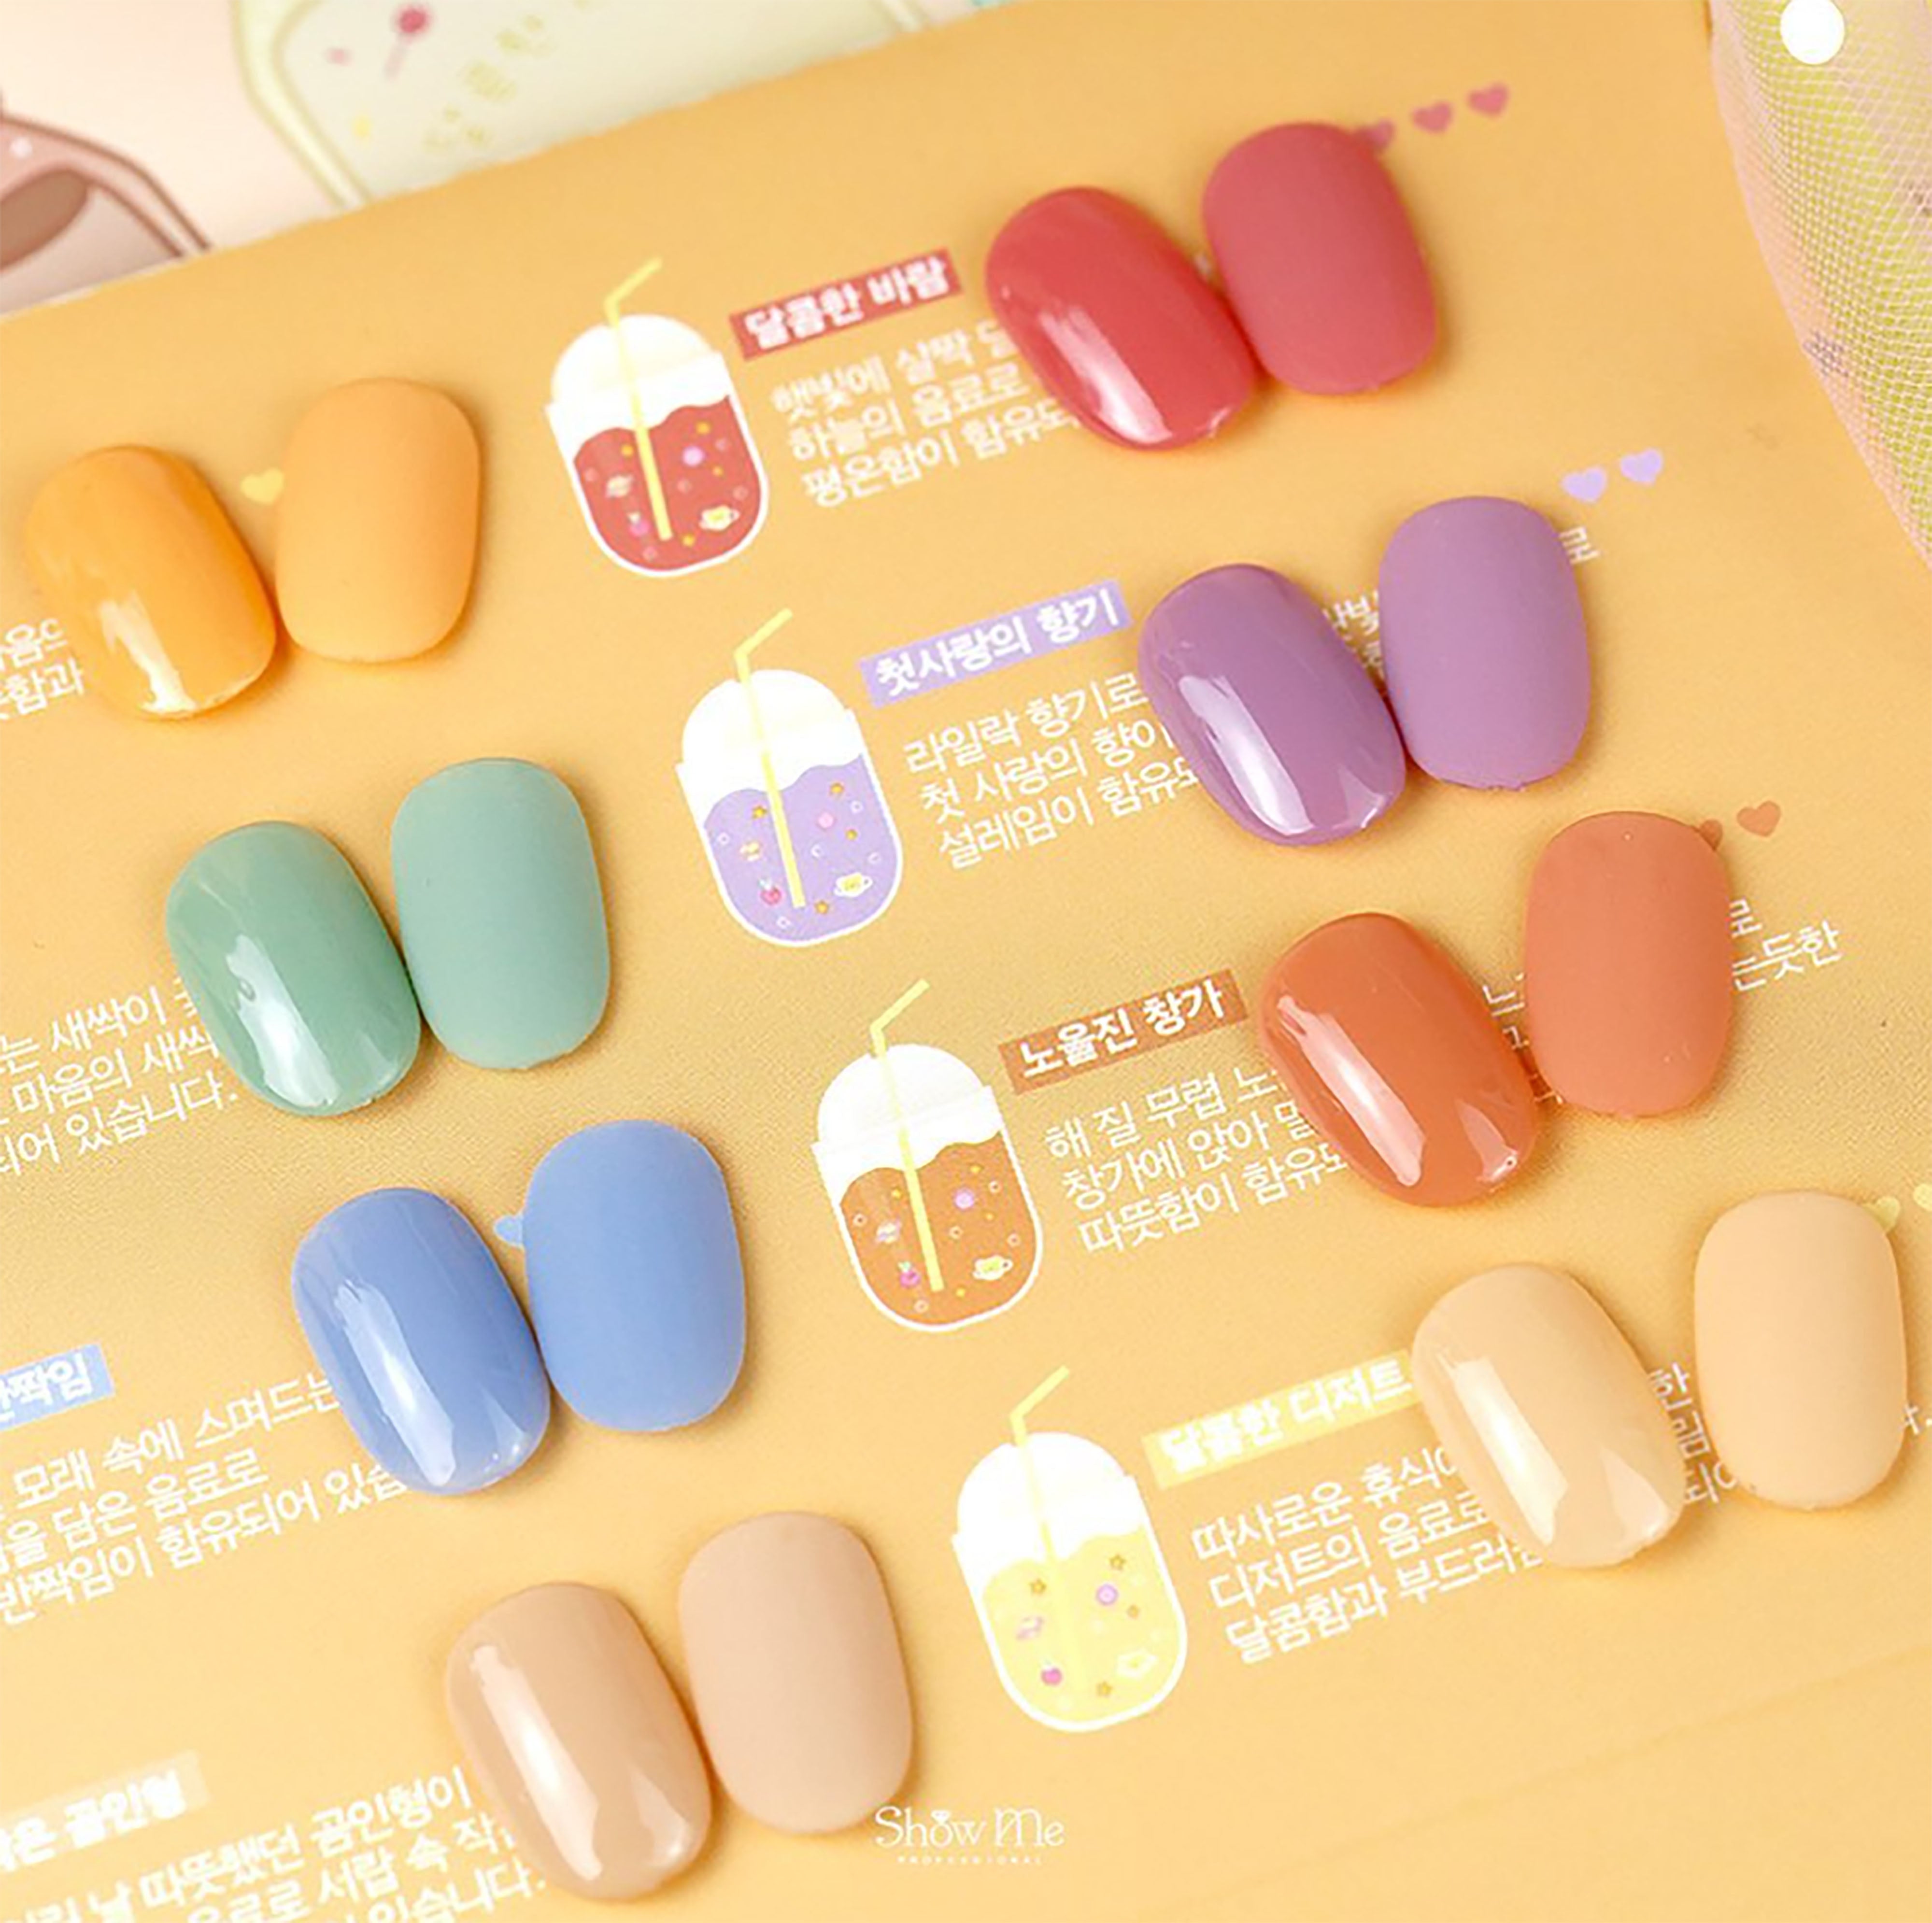 Ohora] NEW Product GEL NAIL TIPS Morning Du Nail (Round Square) Korea  Beauty | eBay